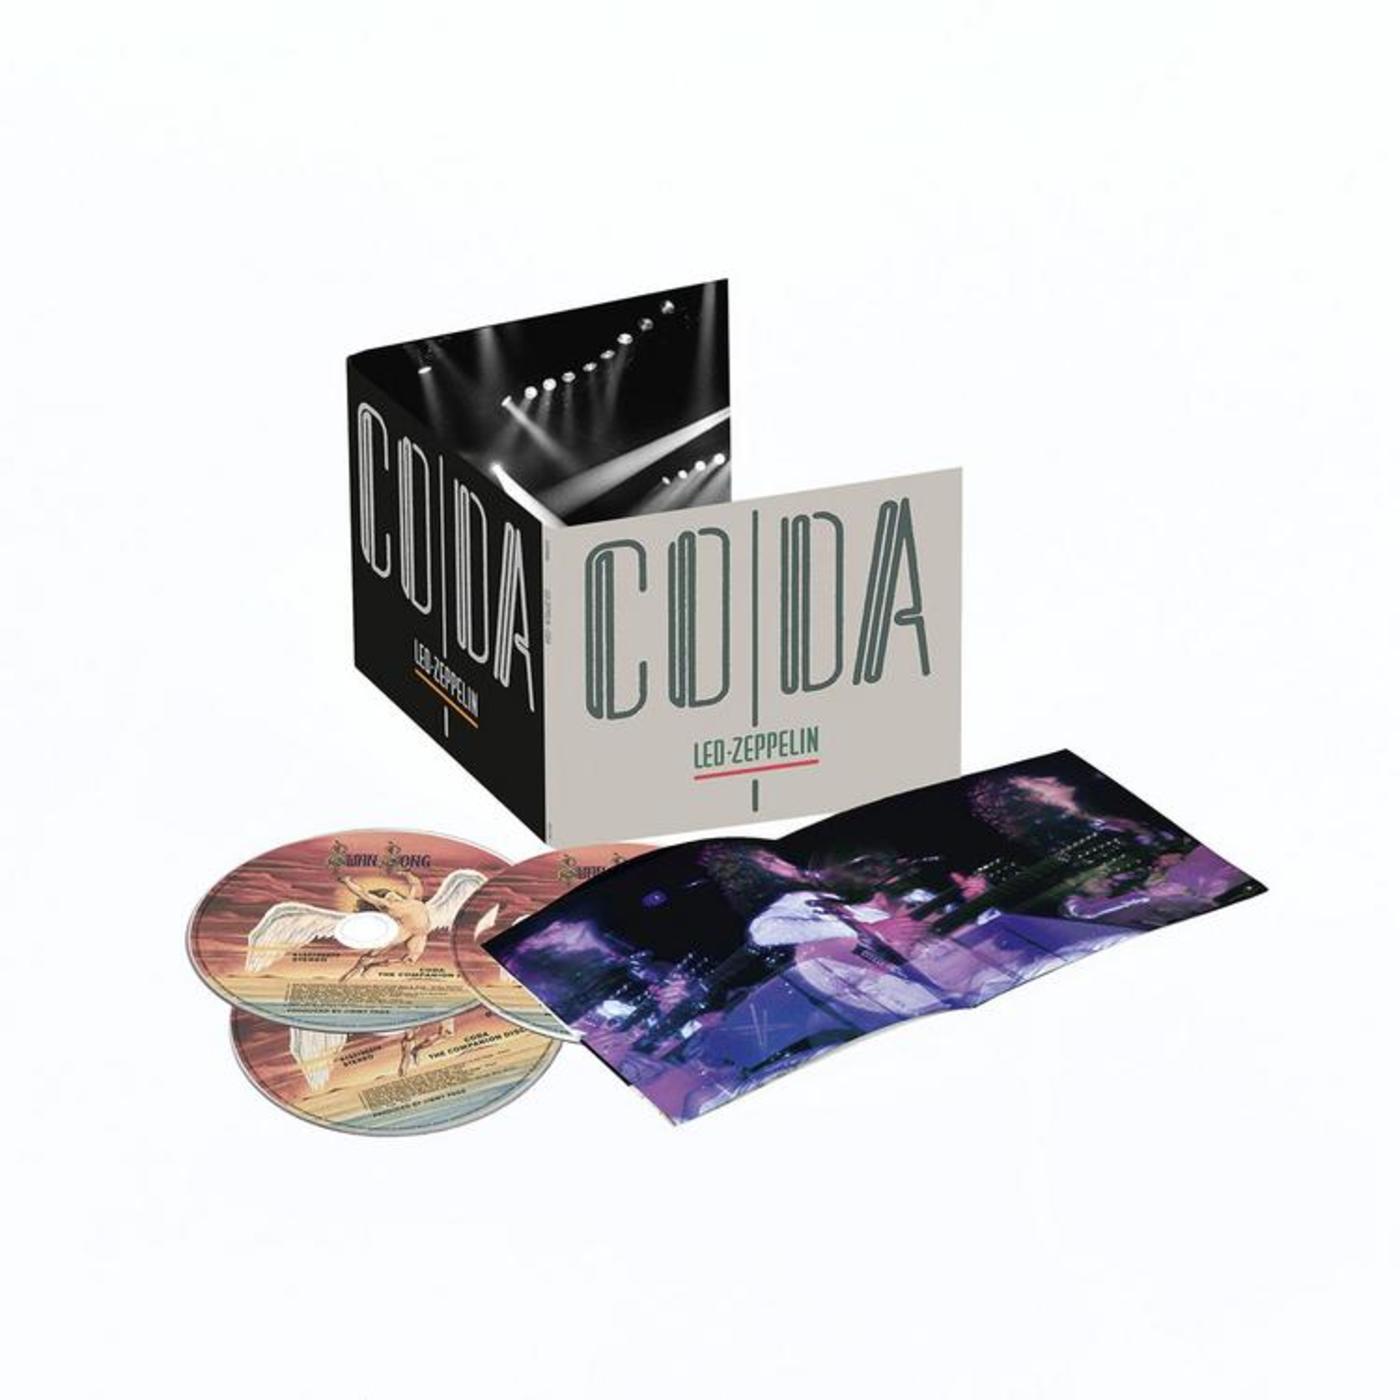 CODA - 2CD